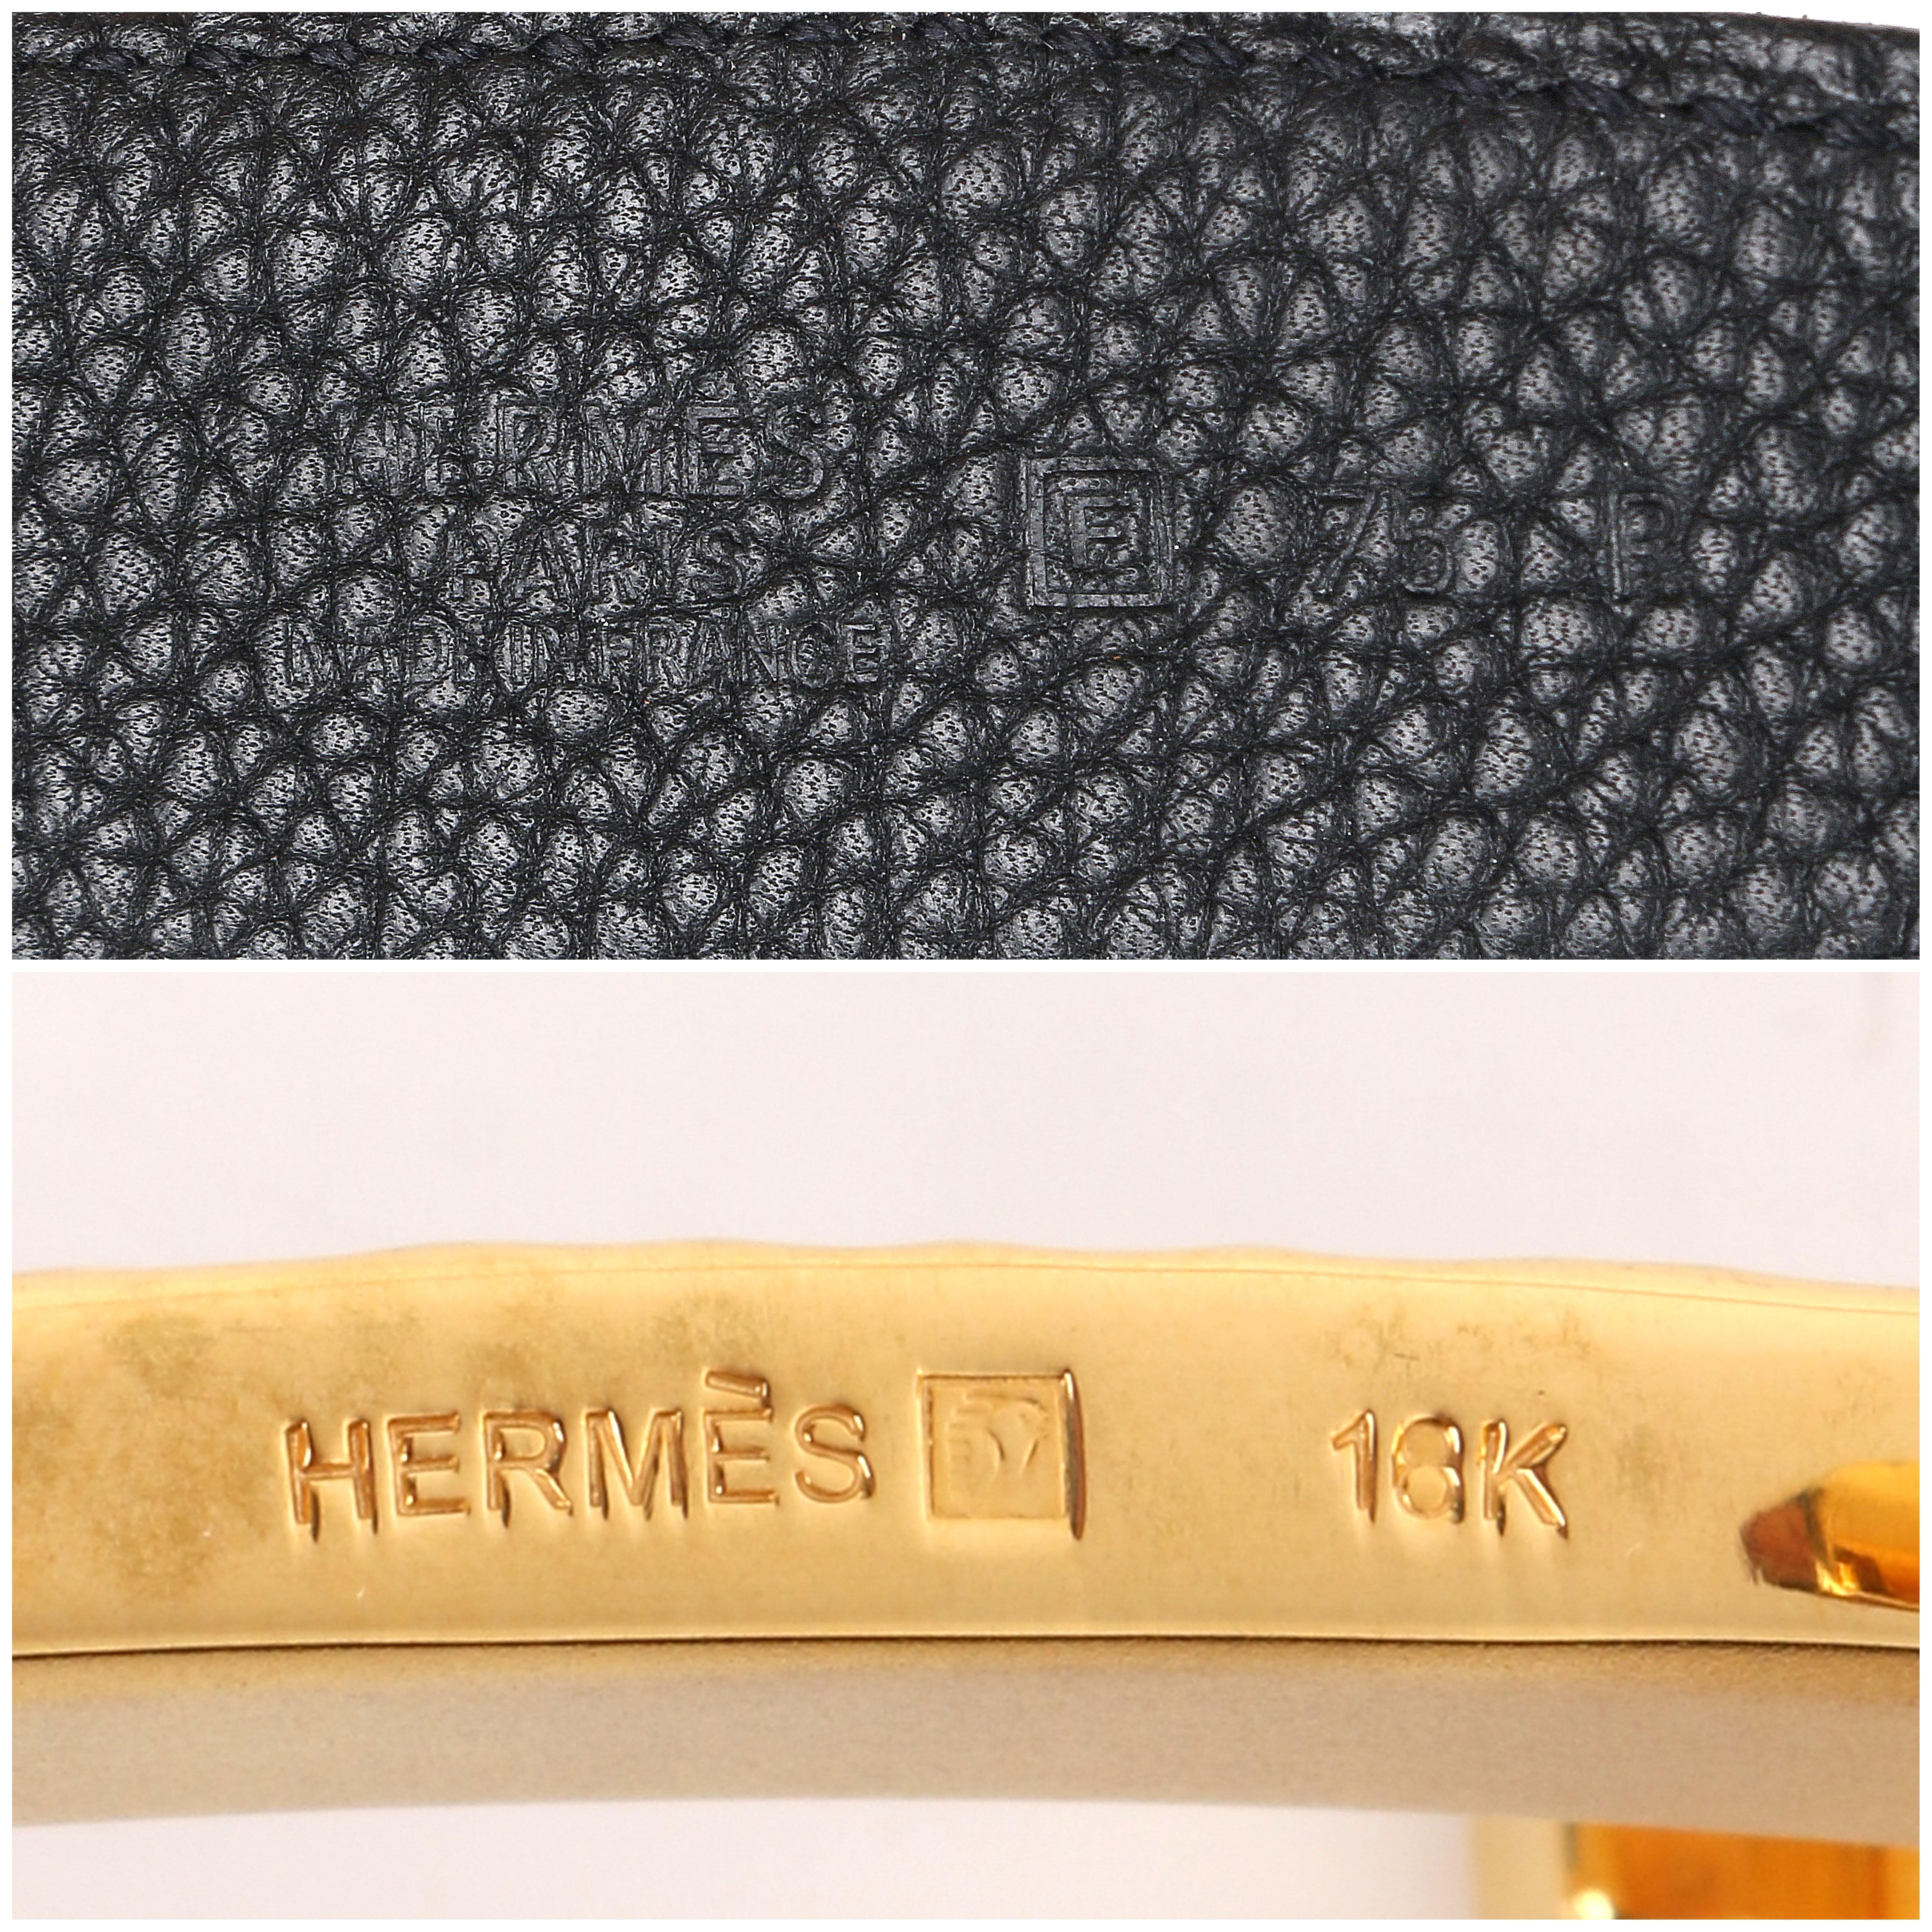 hermes 18k belt buckle